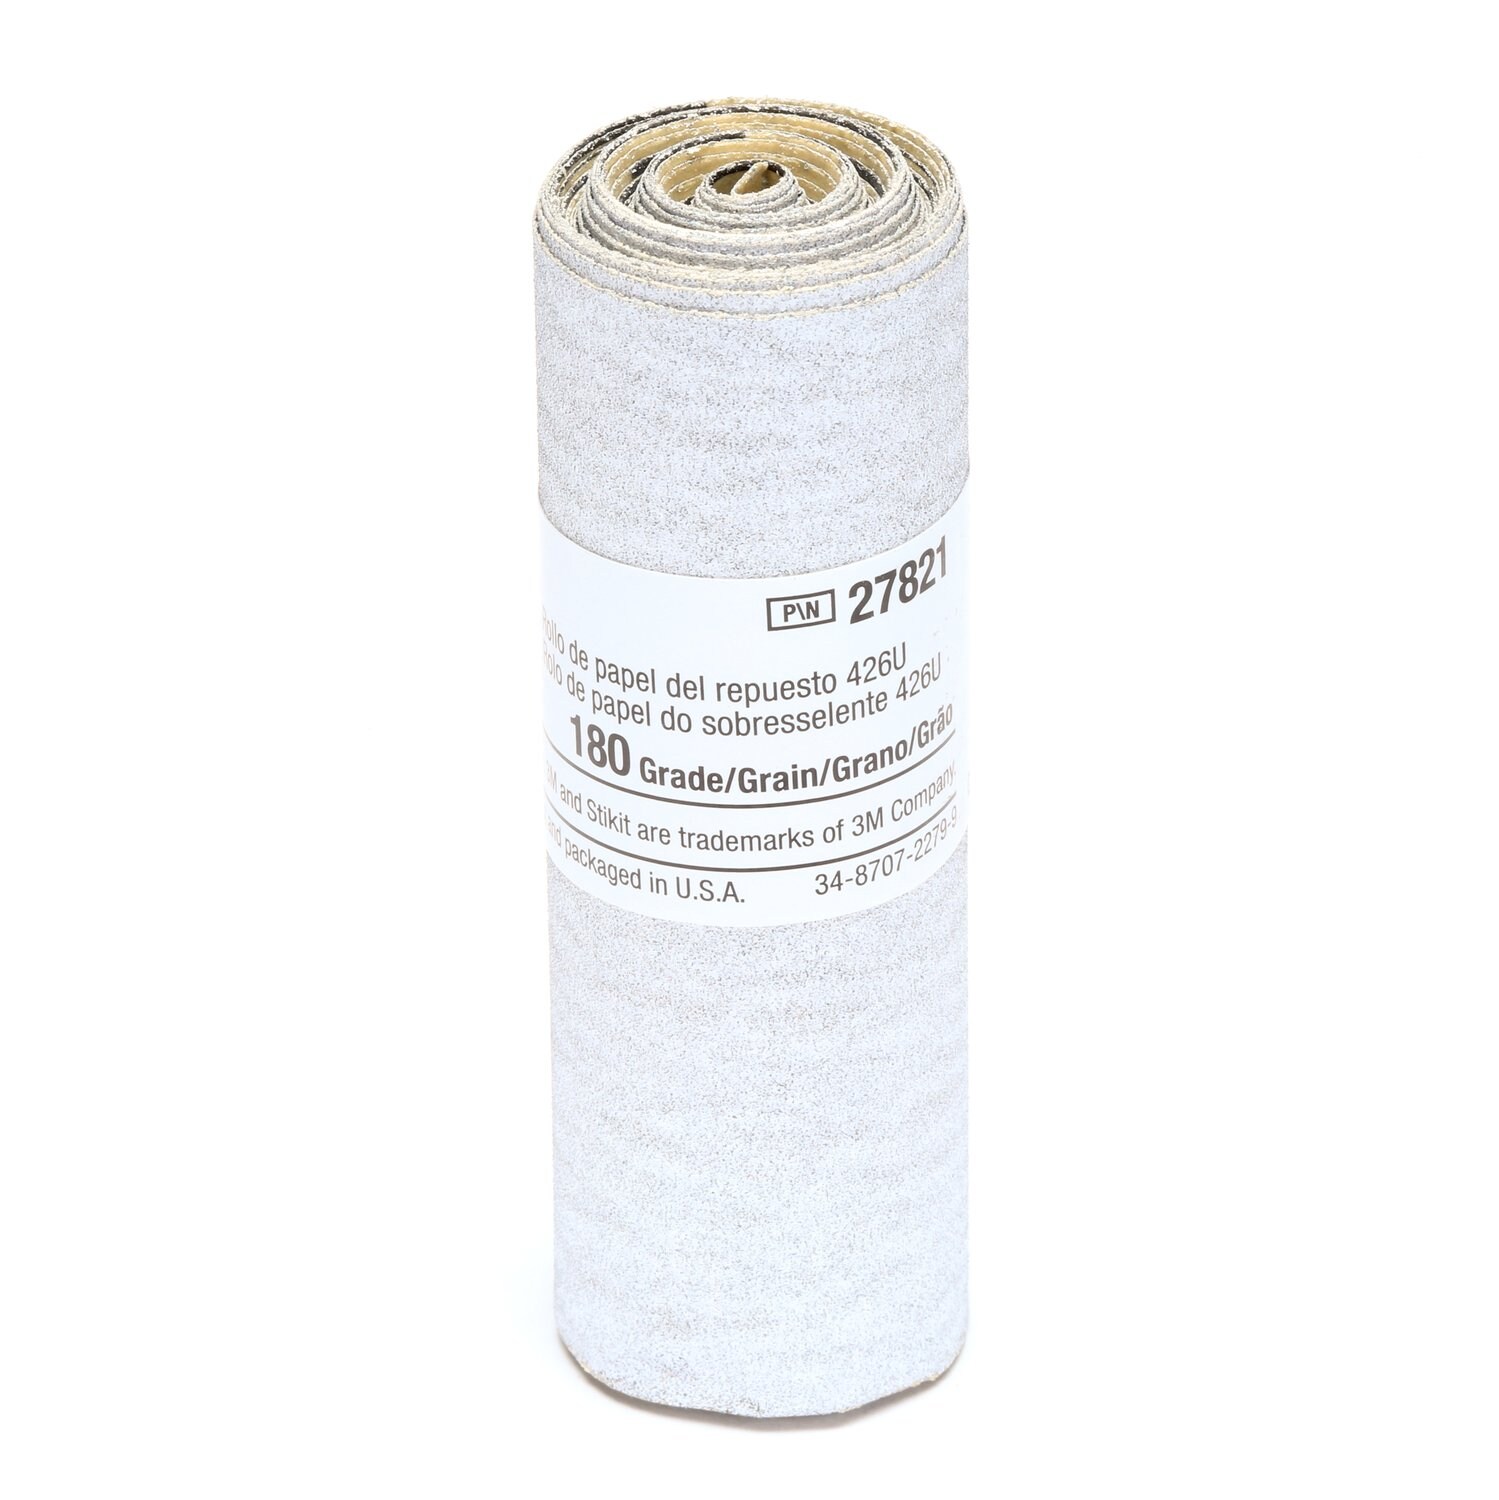 7000045205 - 3M Stikit Paper Refill Roll 426U, 3-1/4 in x 85 in 180 A-weight,
10/Carton, 50 ea/Case